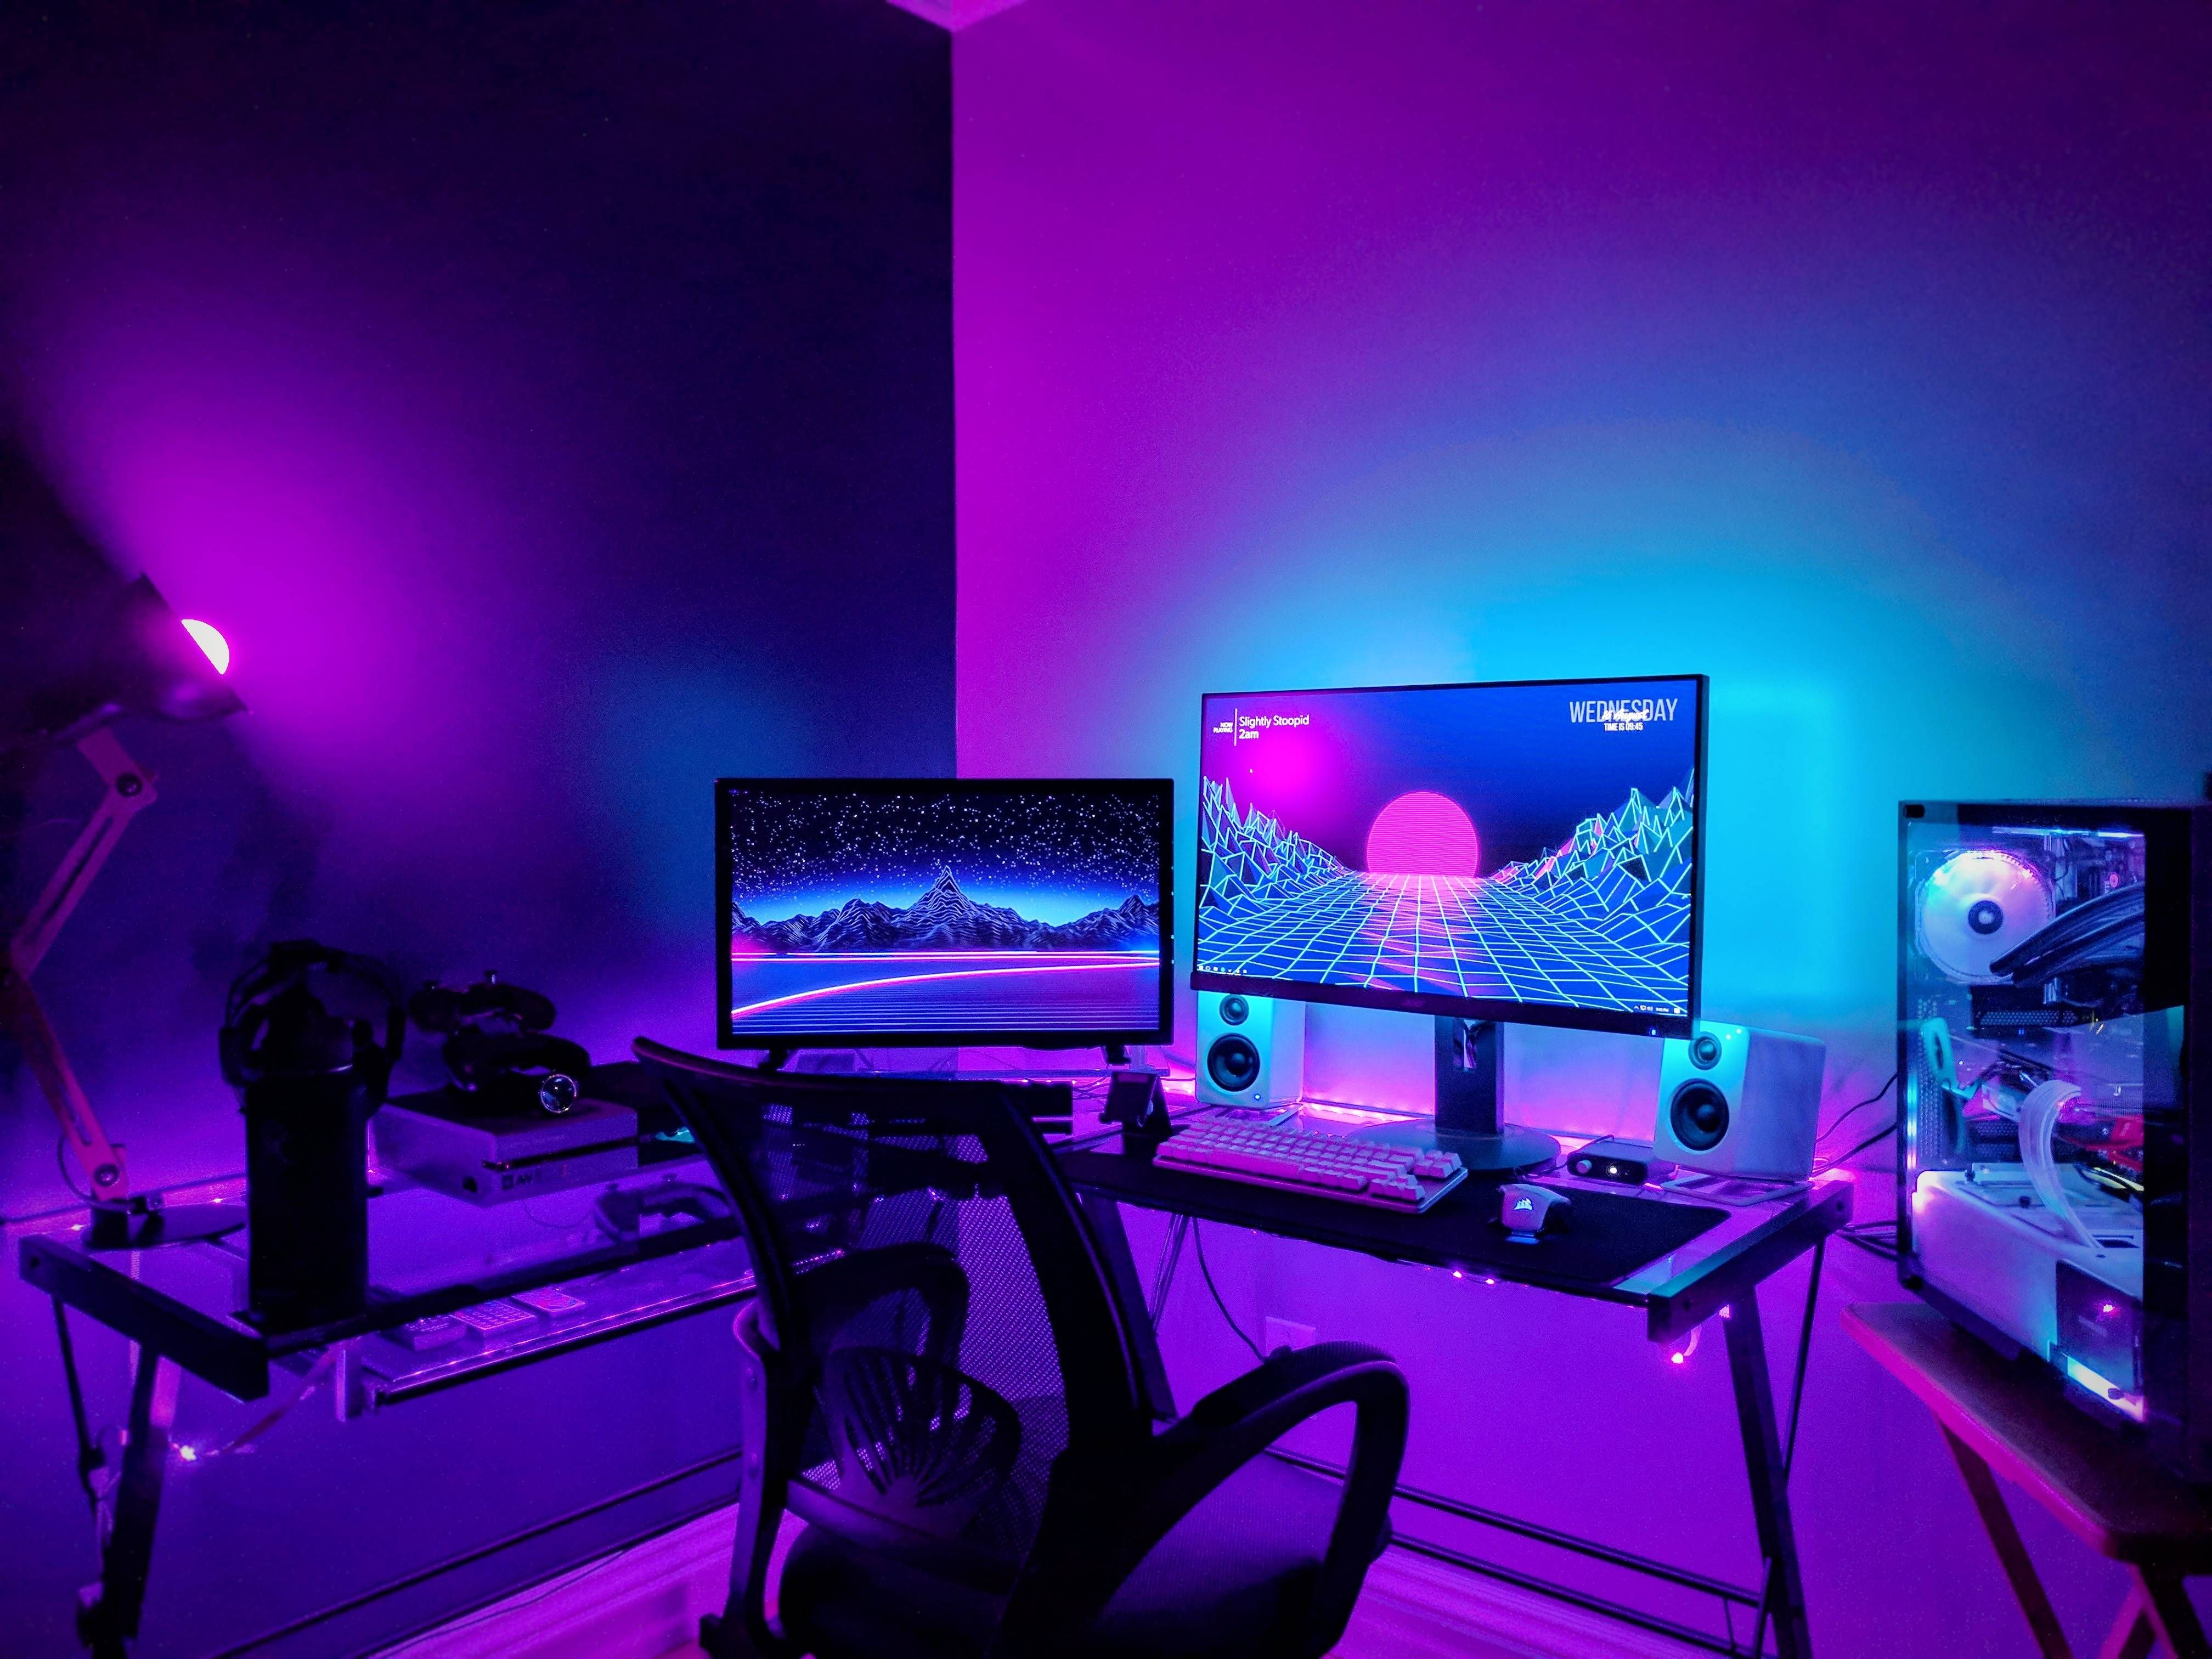 gaming setup wallpaper,purple,visual effect lighting,violet,lighting,room